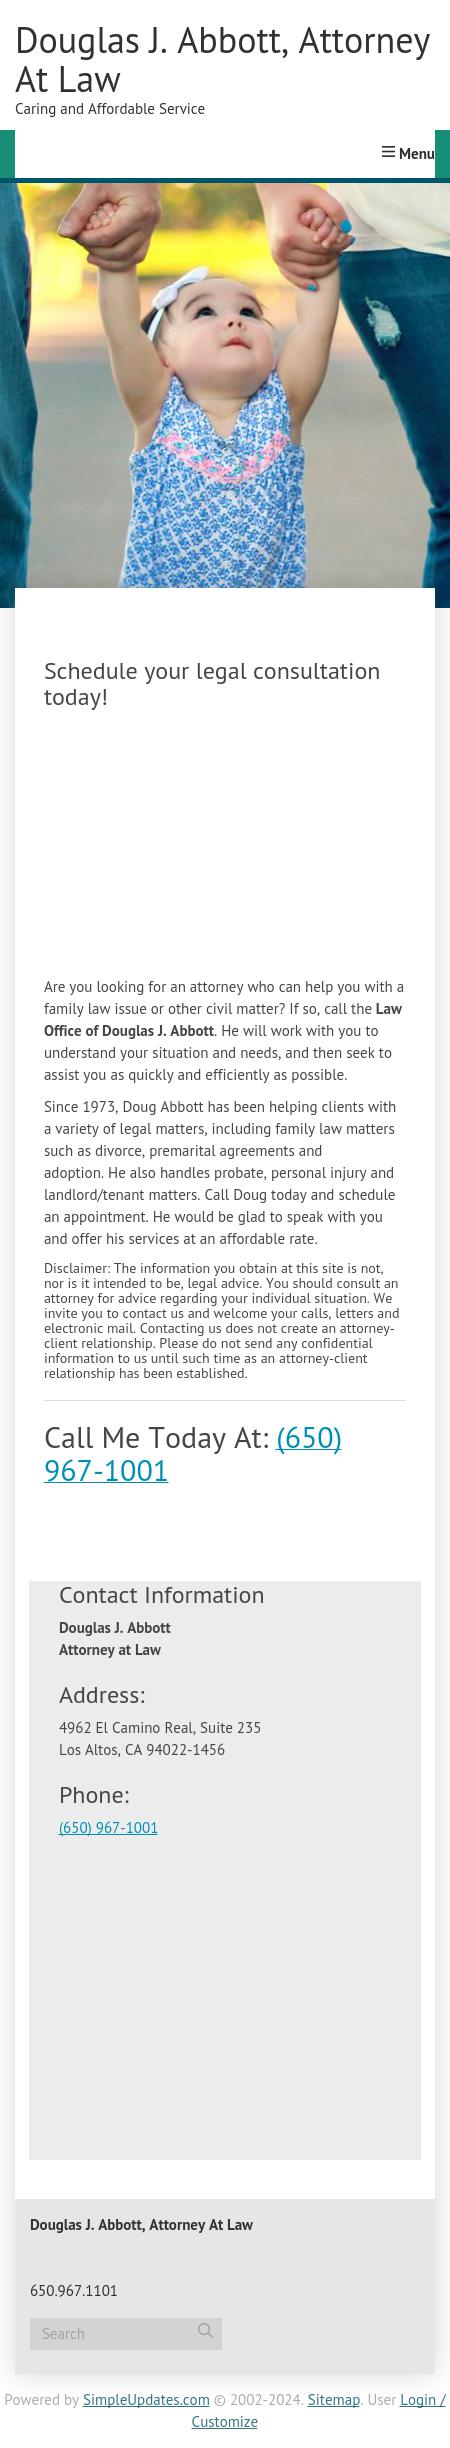 Douglas J. Abbott Attorney At Law - Los Altos CA Lawyers